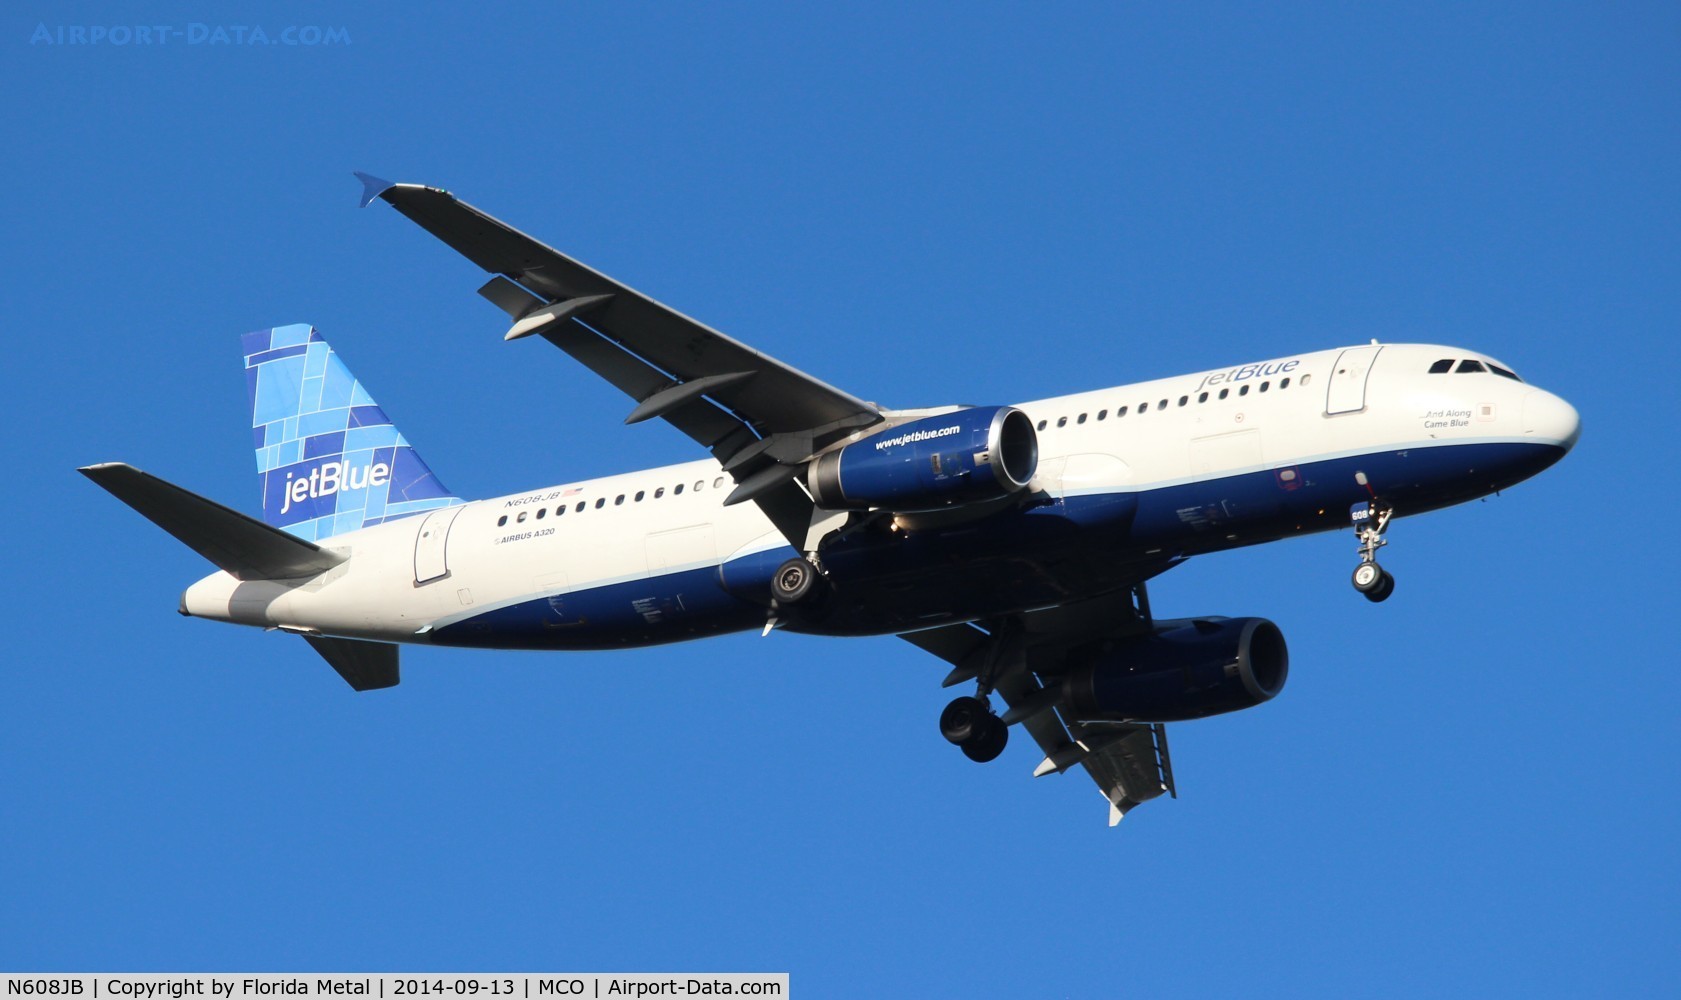 N608JB, 2005 Airbus A320-232 C/N 2415, Jet Blue